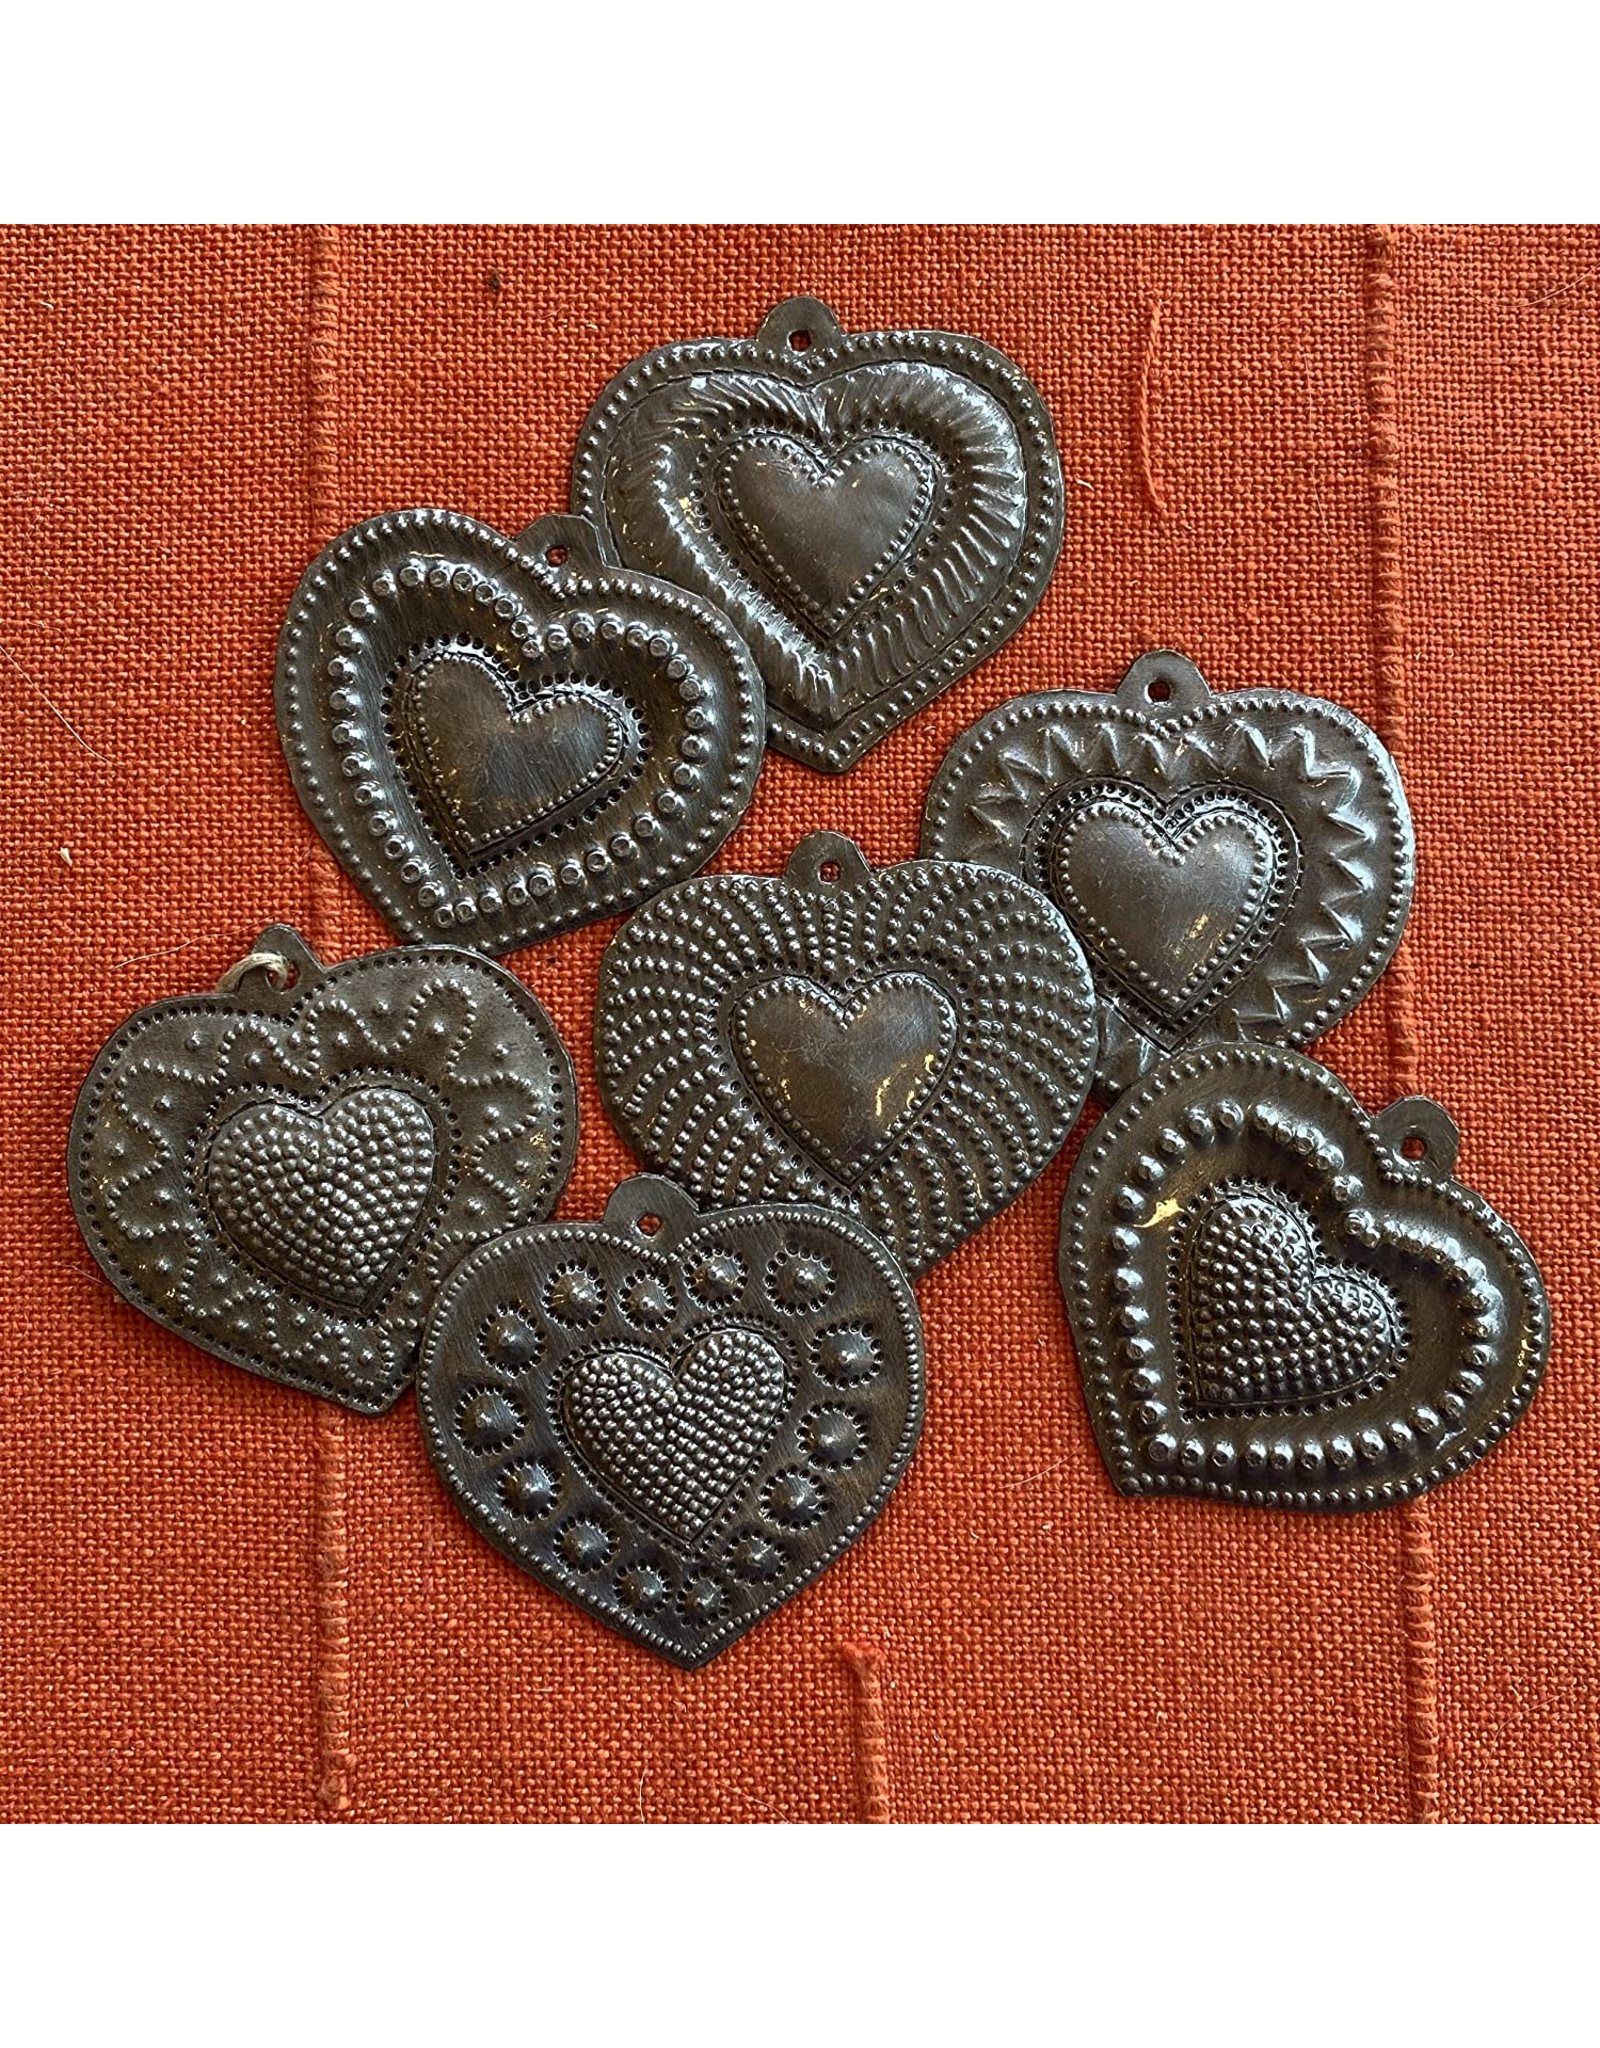 Haiti Milagros Cut Metal Heart Ornament, Haiti